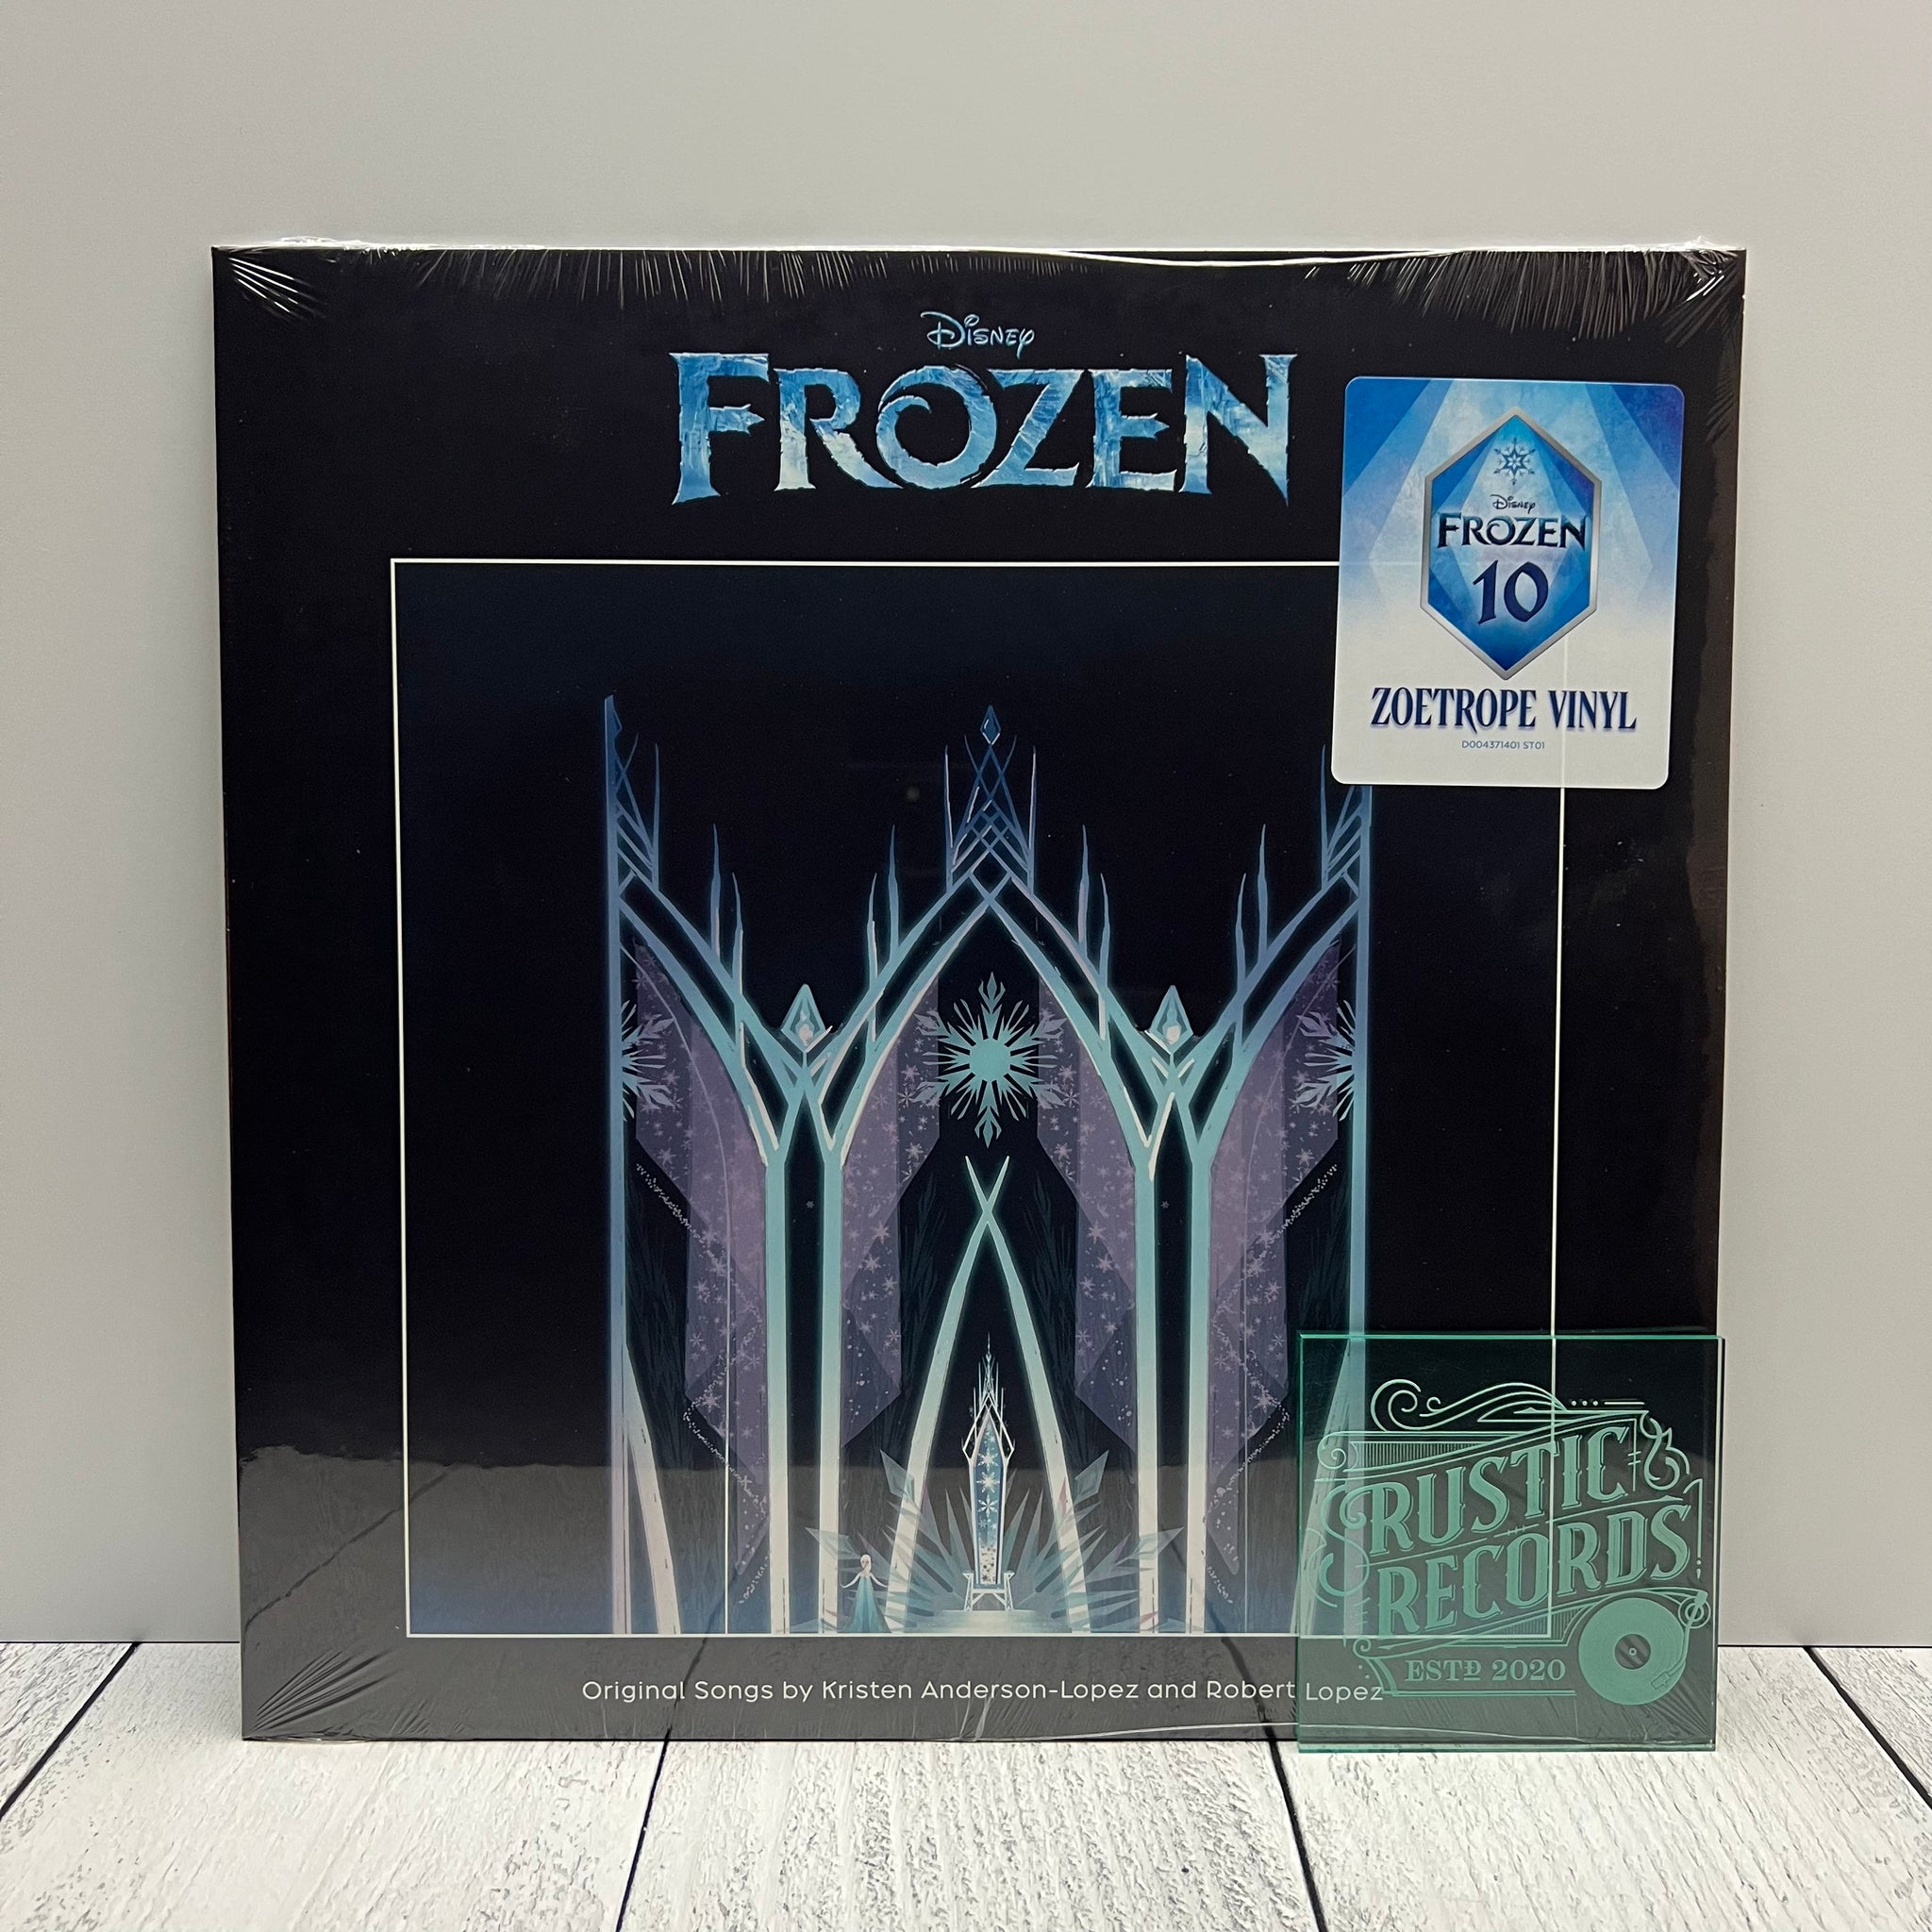 Frozen Soundtrack (Zoetrope Vinyl)